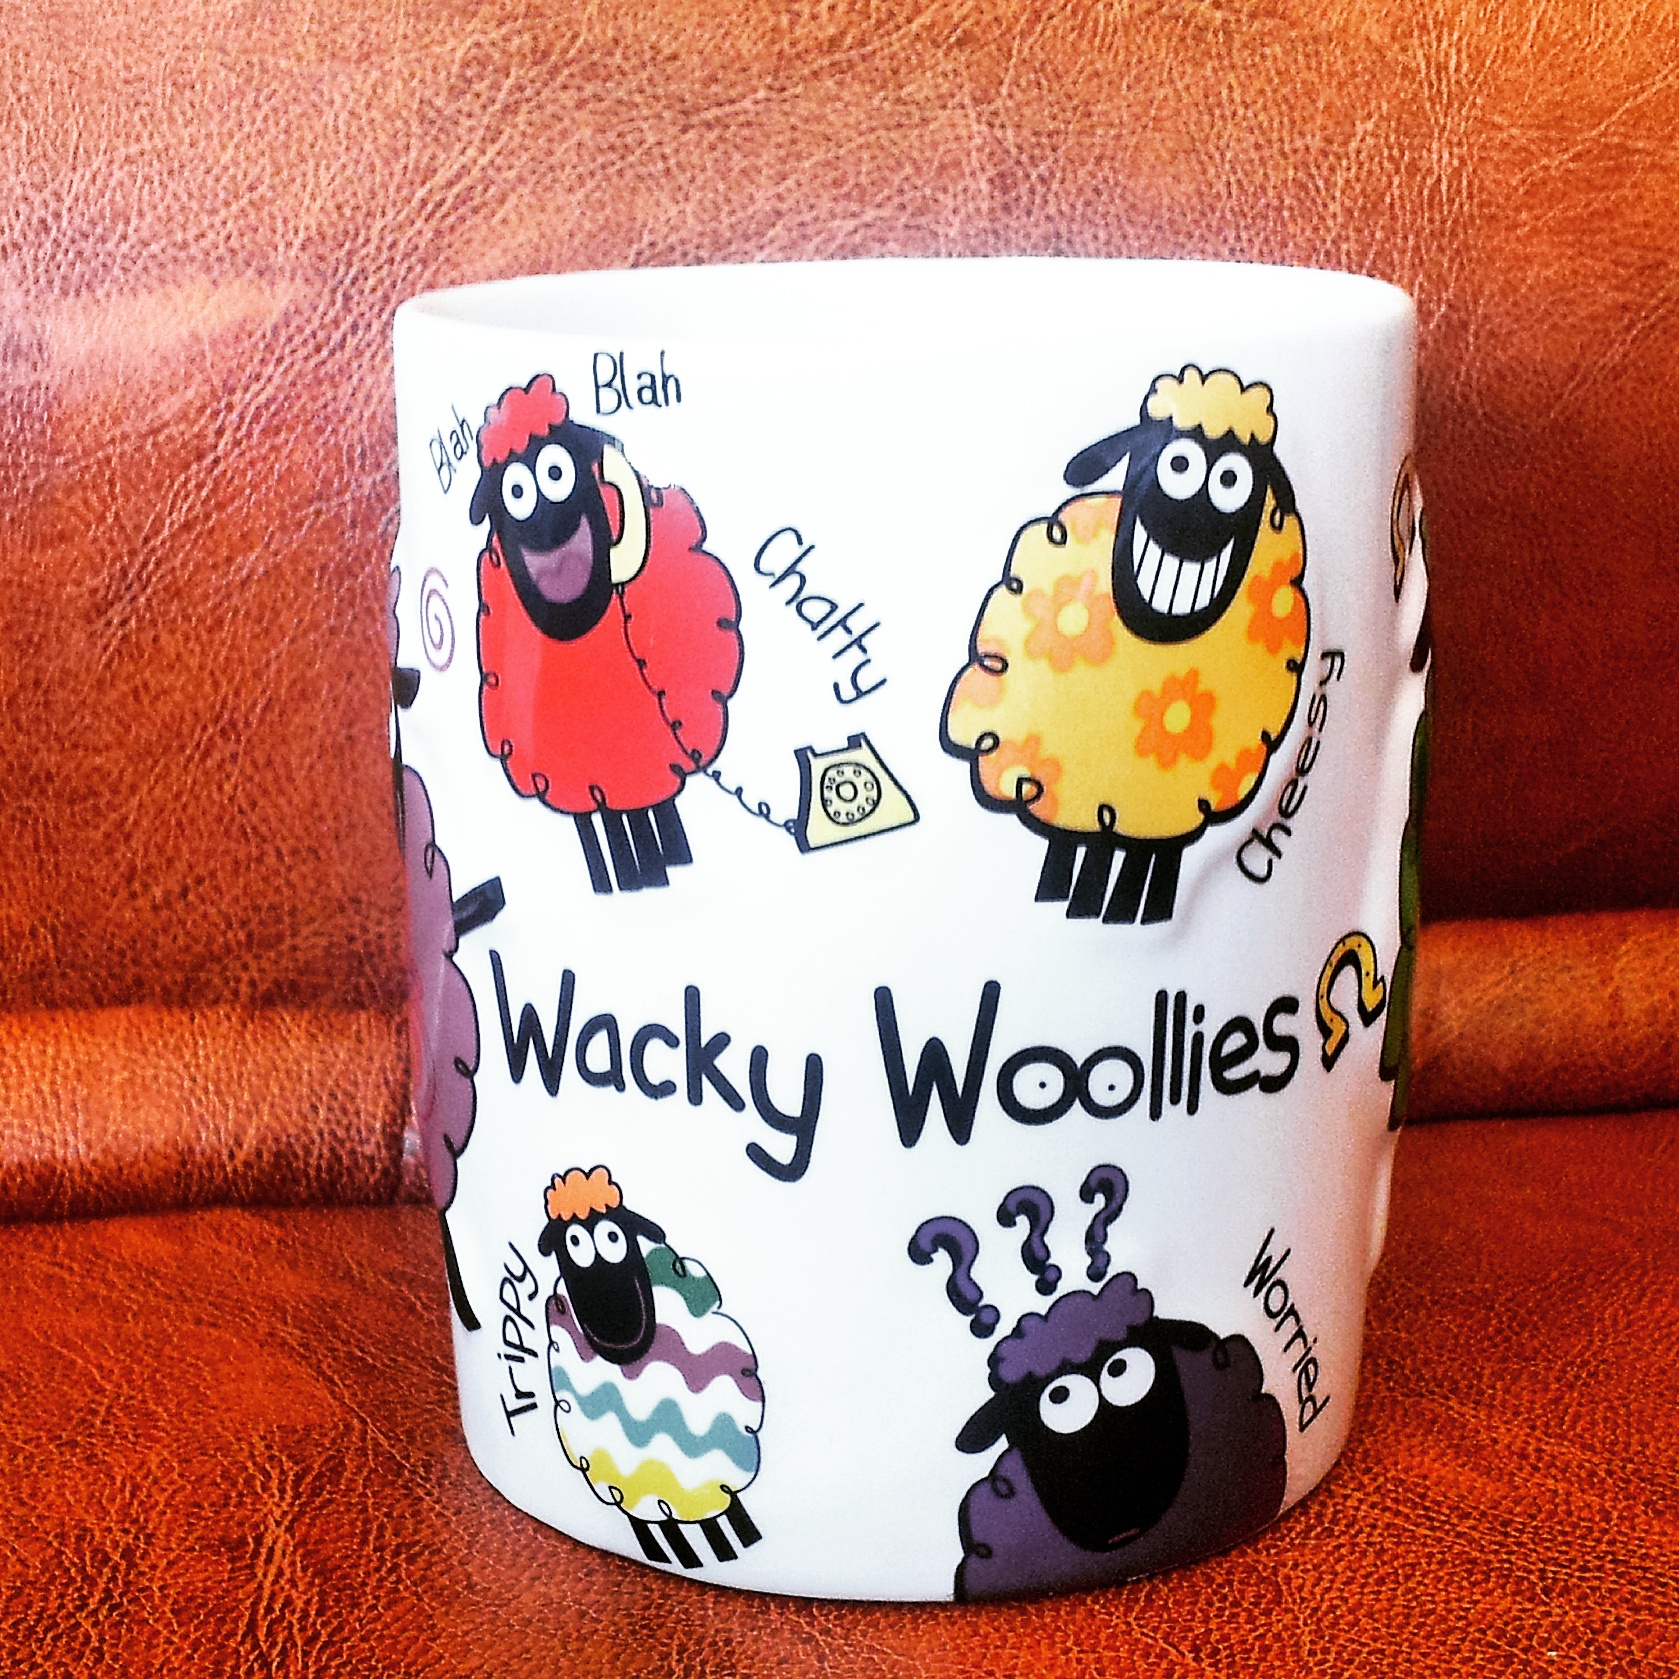 Funny Wacky Woolies mug from Dublin, Ireland - travel souvenir